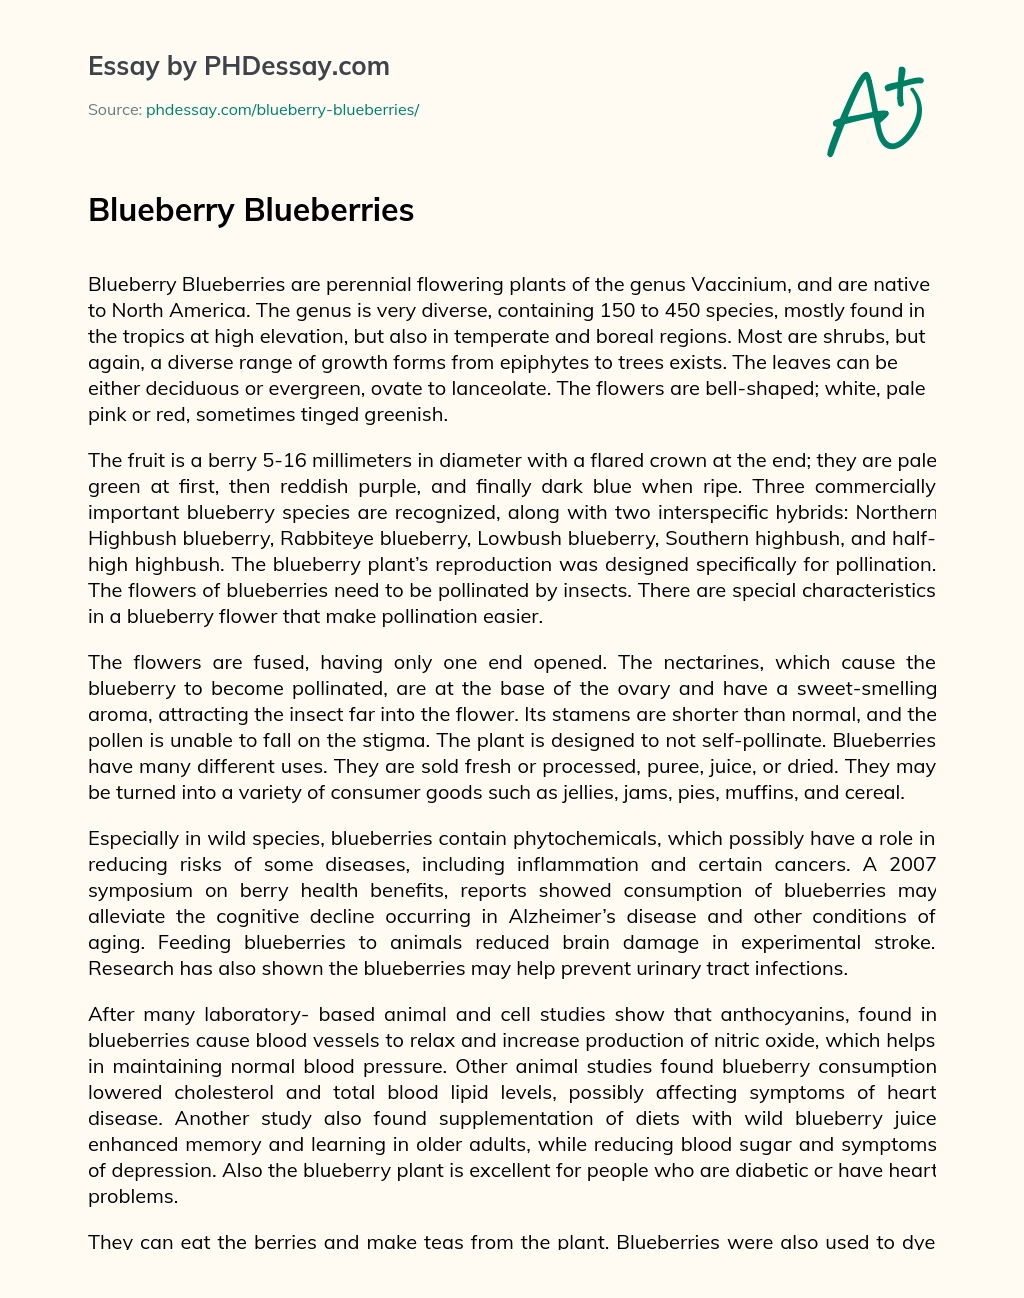 Blueberry Blueberries essay